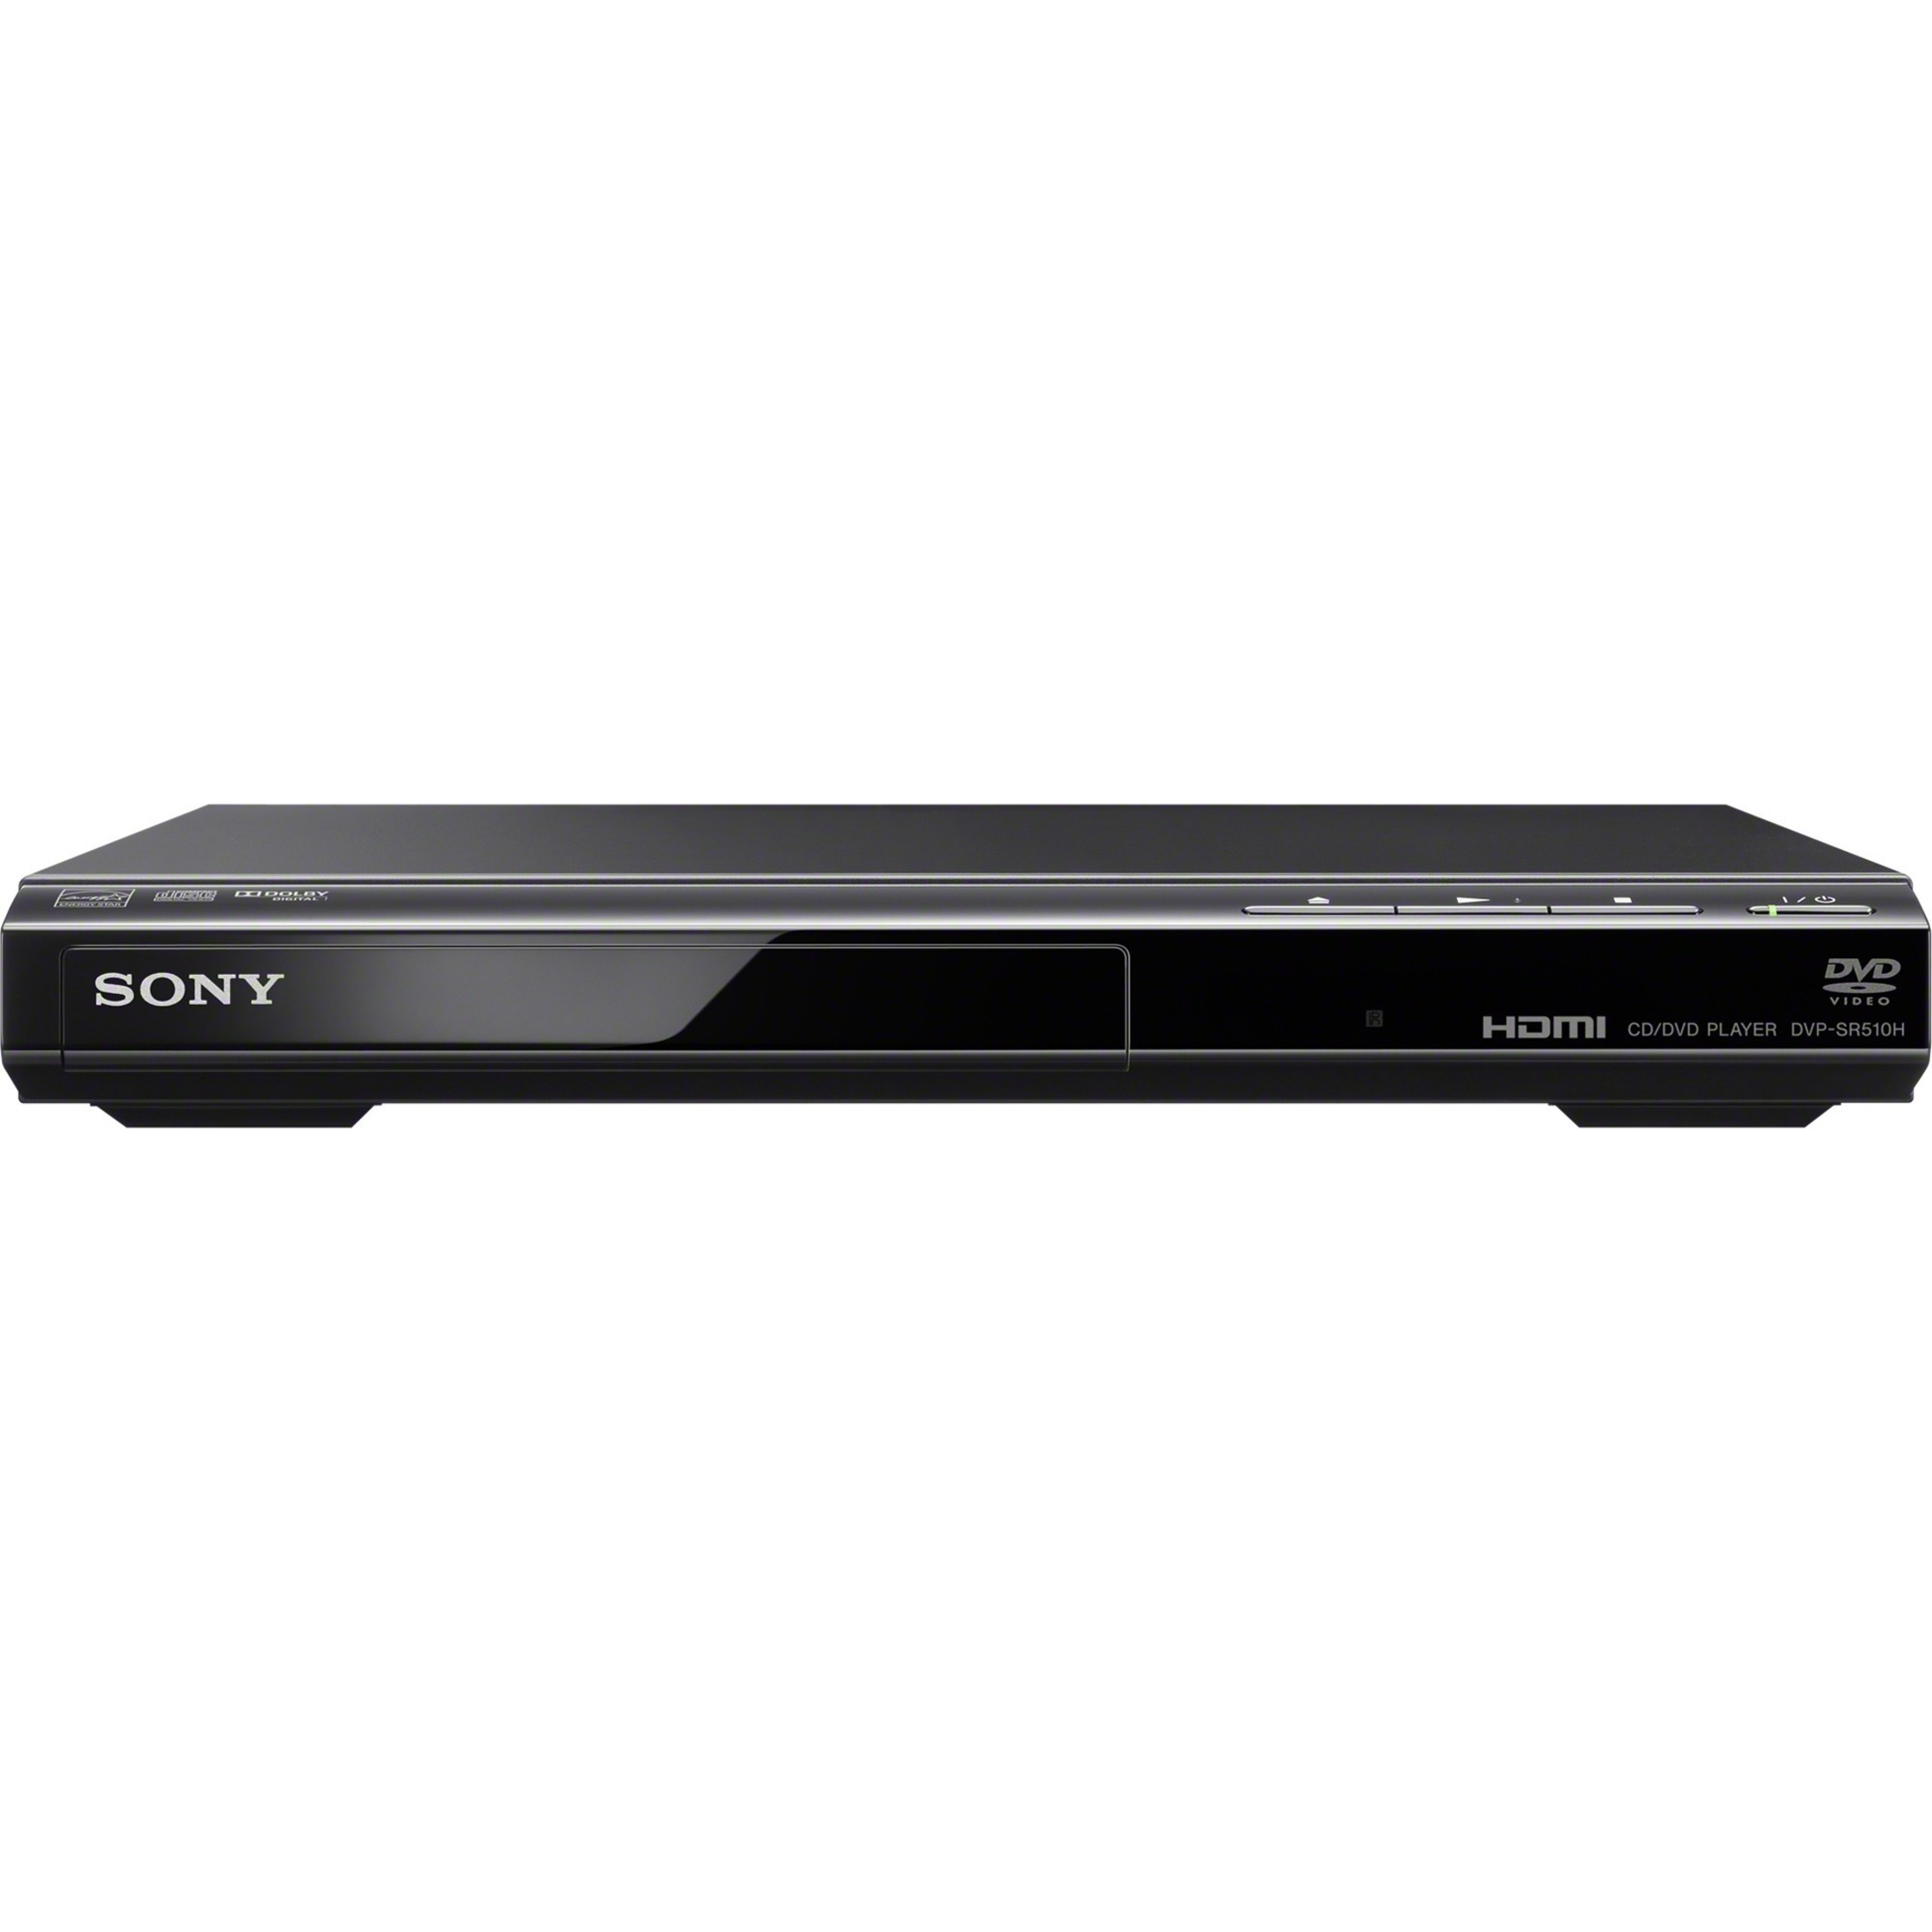 Sony DVP-SR510H 1 Disc(s) DVD Player, 1080p, Black - image 1 of 7